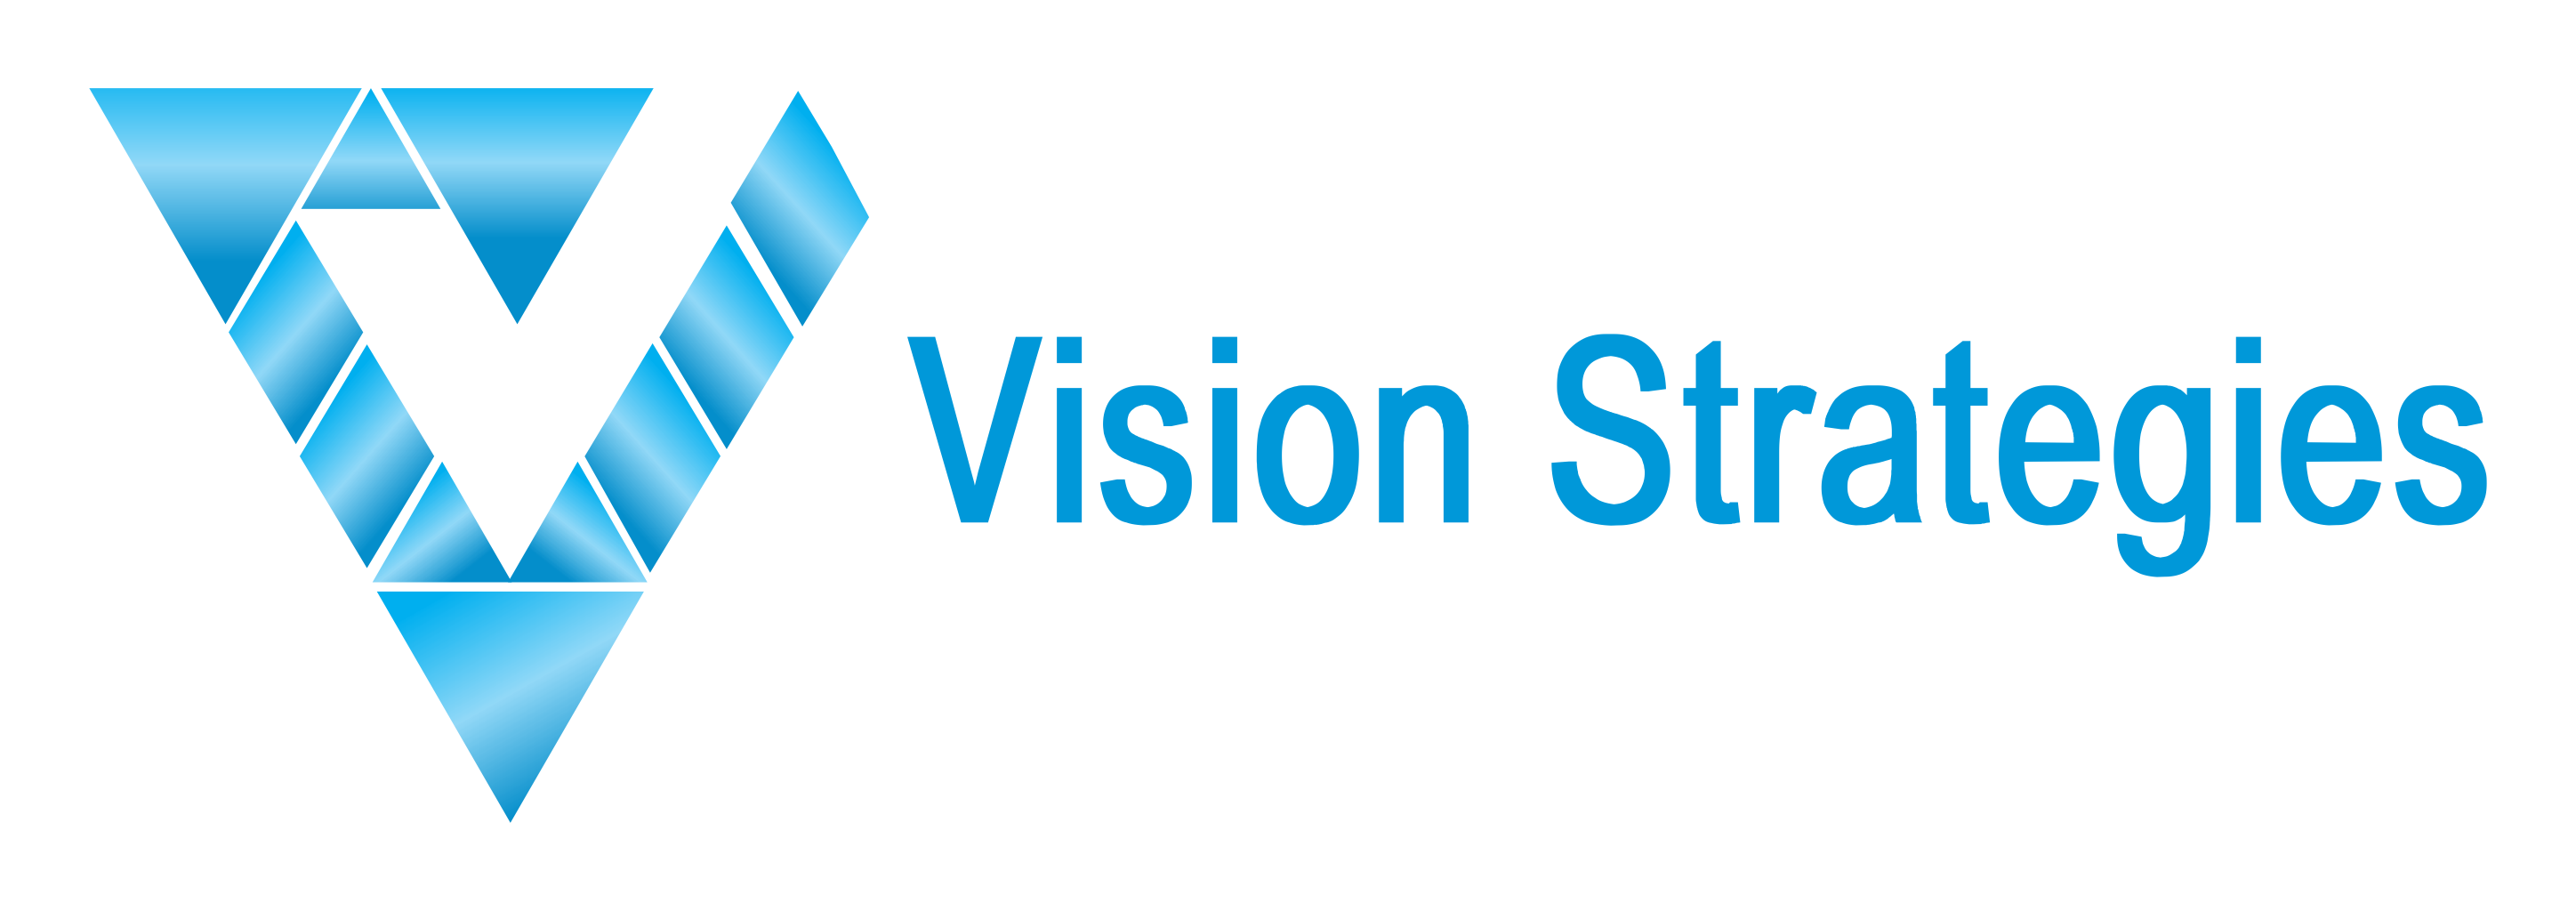 Vision Strategies